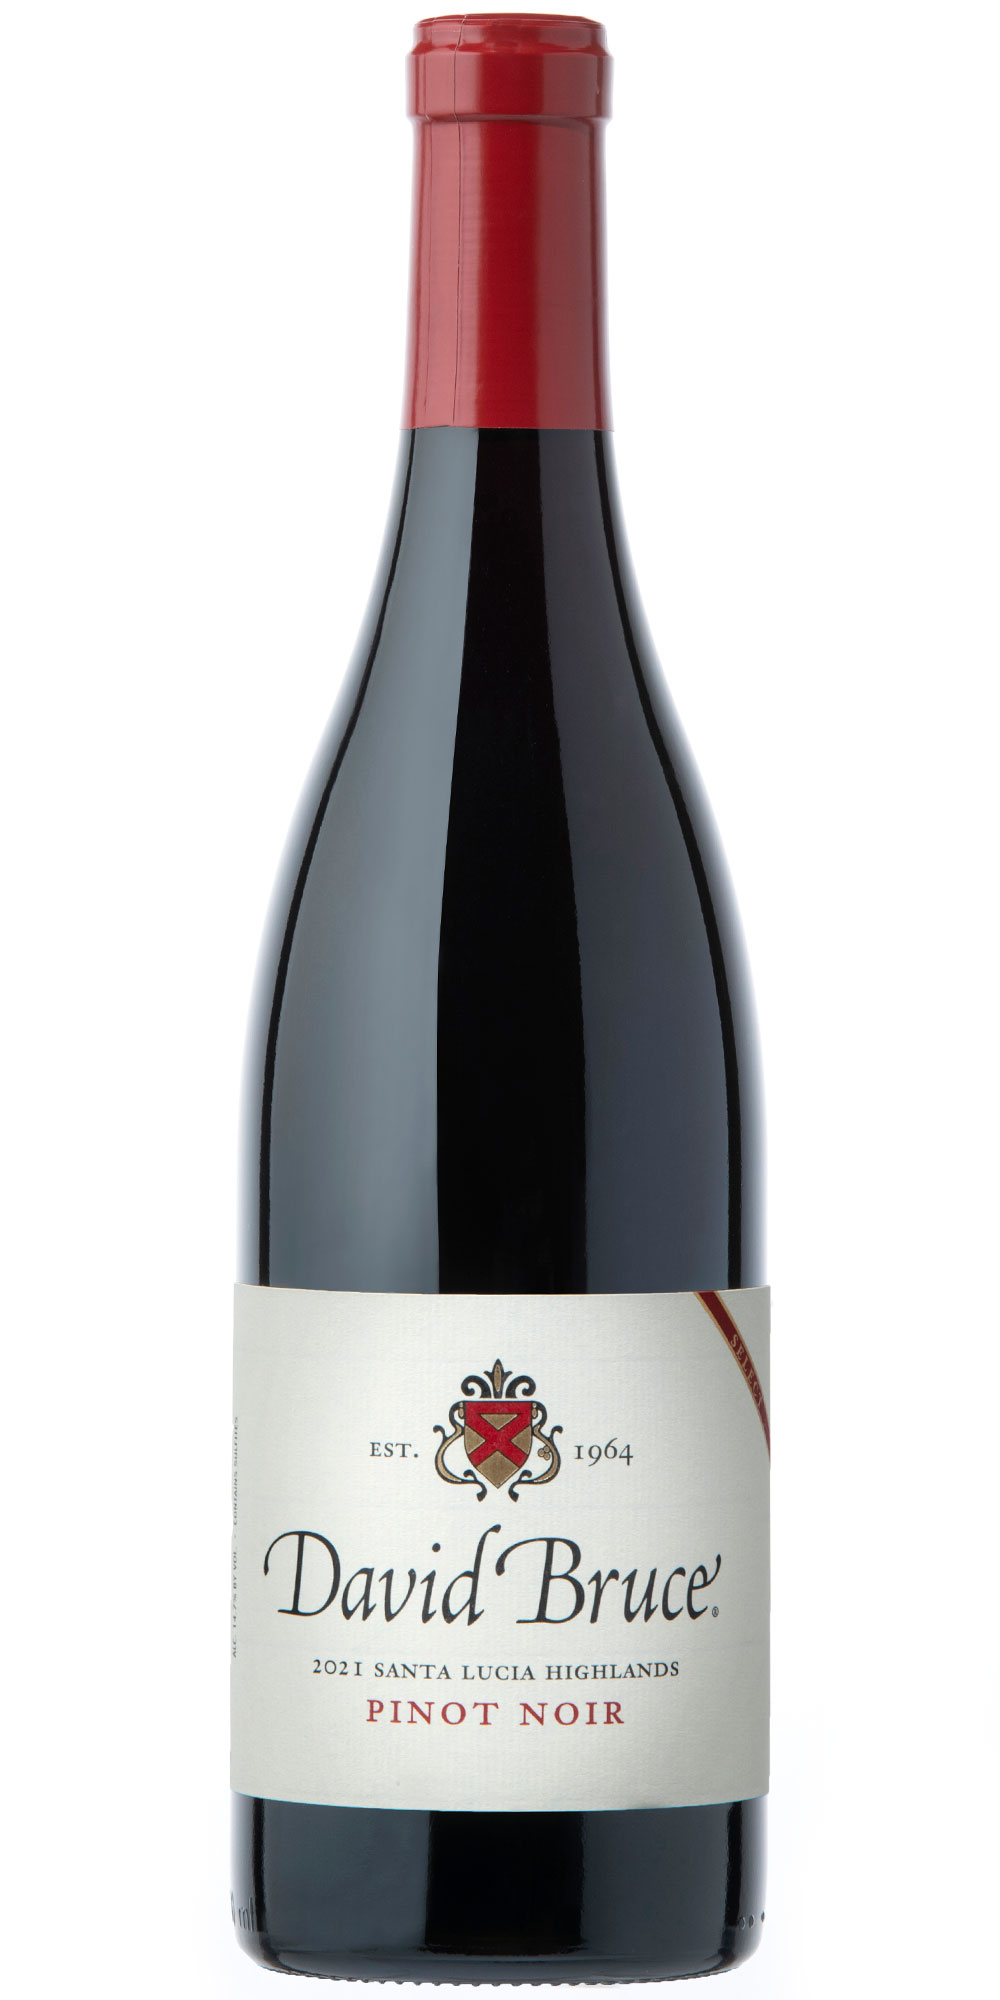 Bottle of David Bruce 2021 Santa Lucia Pinot Noir